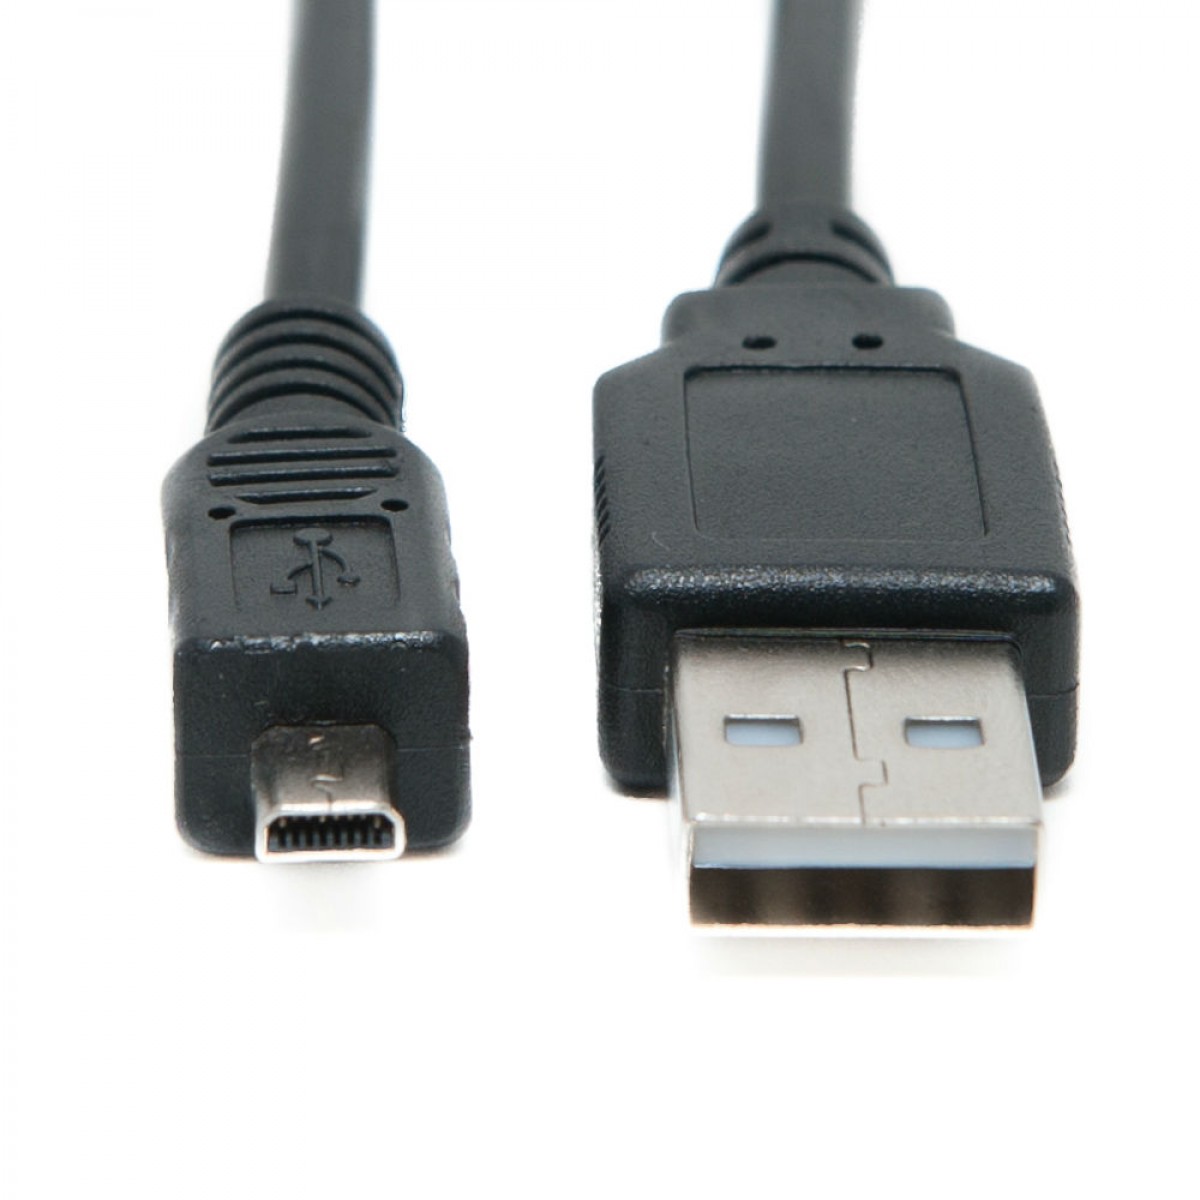 De datos USB sync/photo transferencia Lead Cable Para Fujifilm Finepix F750exr